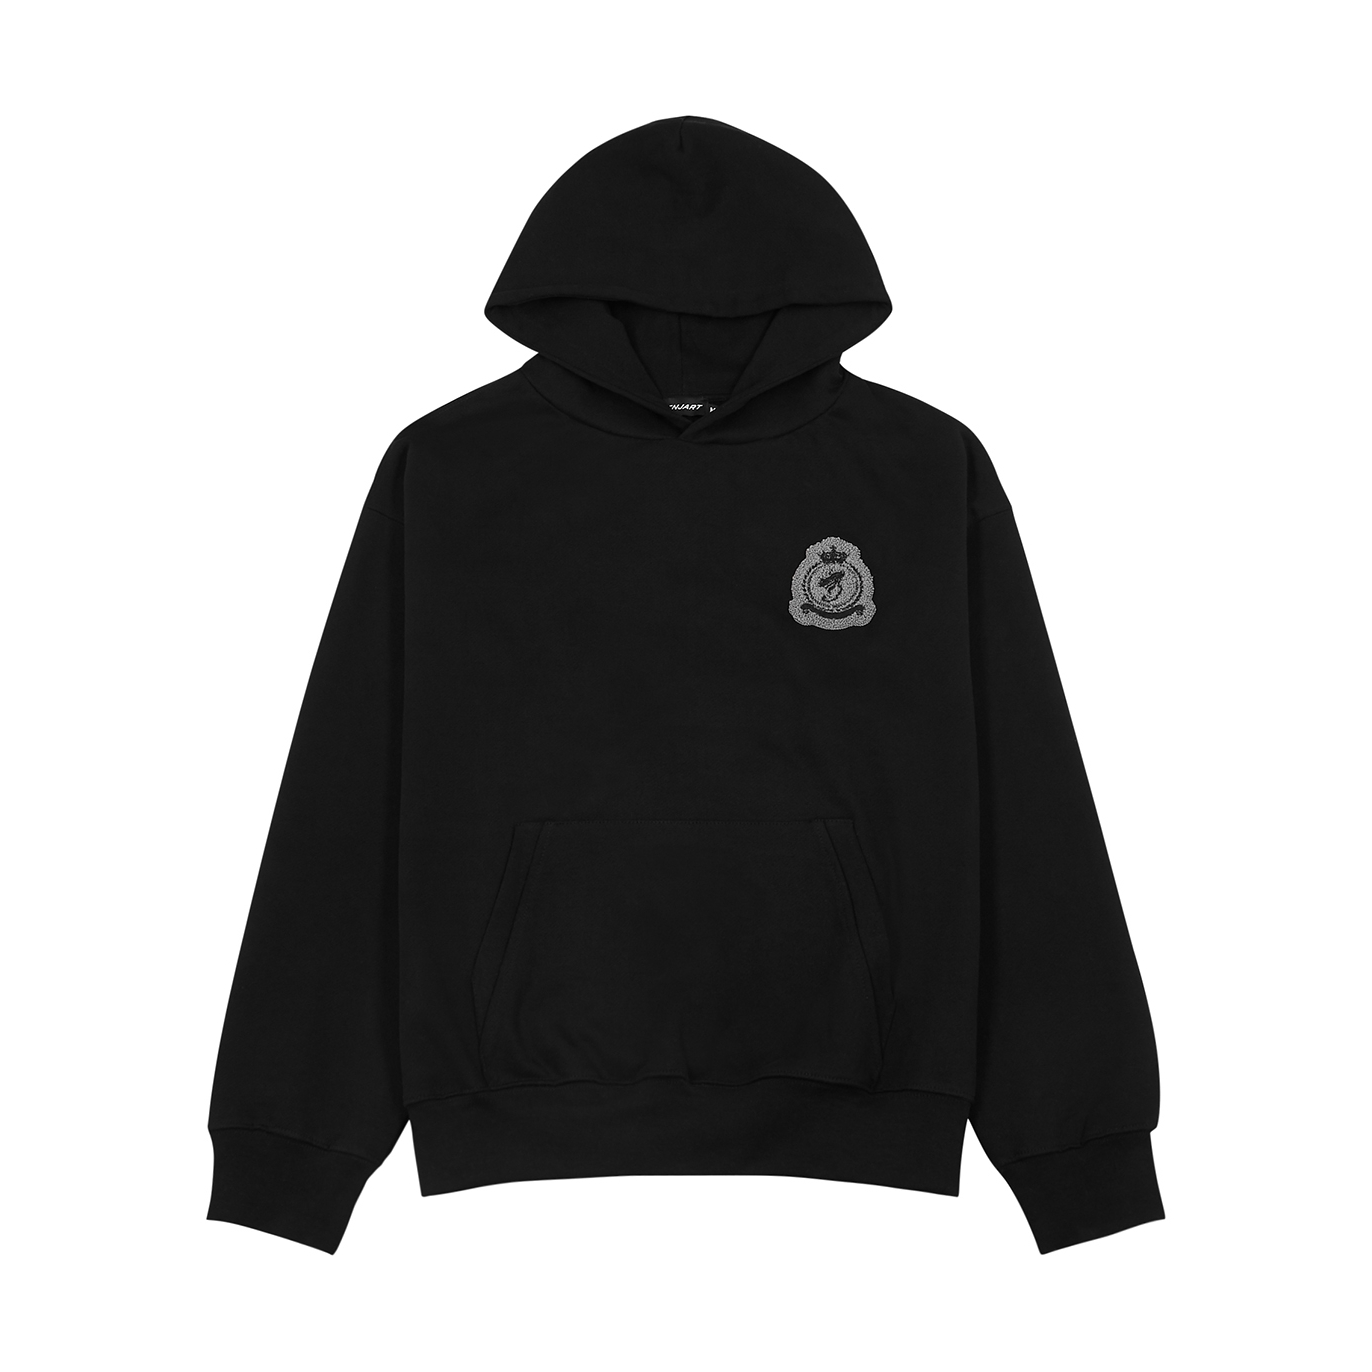 Benjart Black Logo Hooded Cotton Sweatshirt - XL